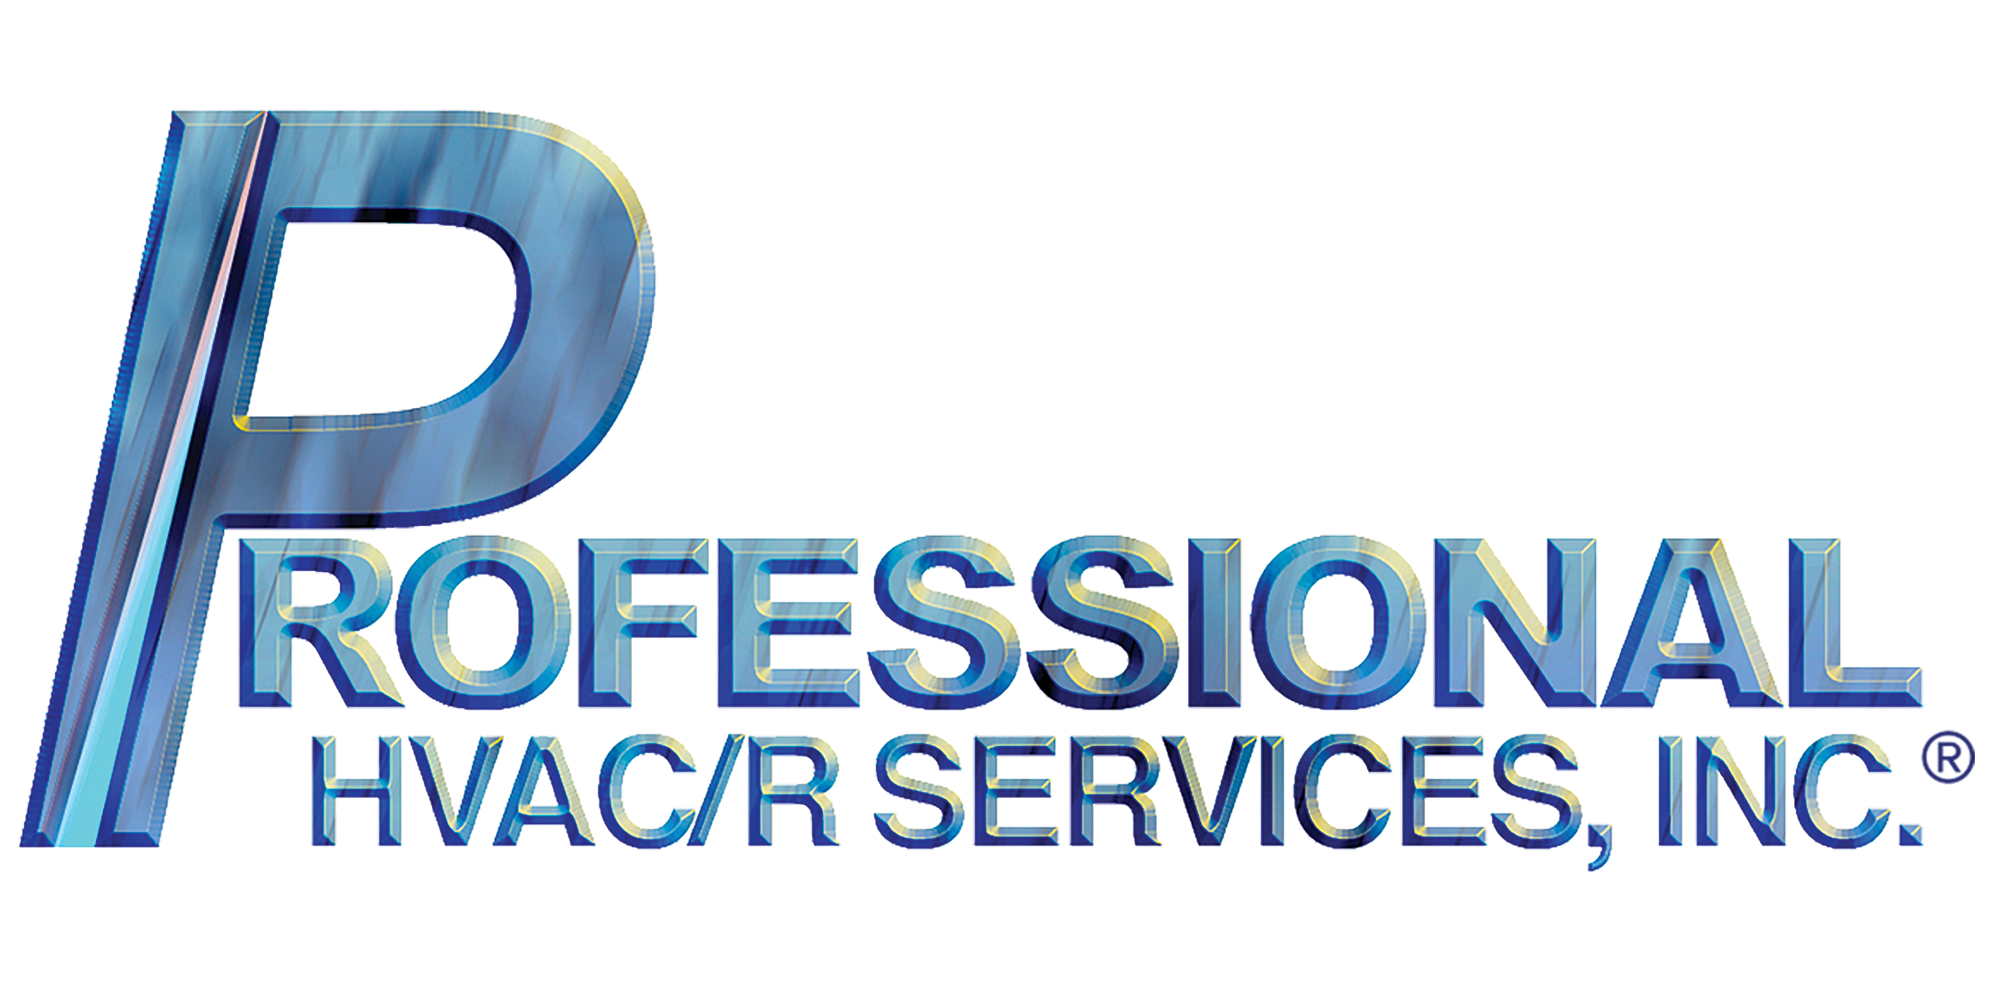 Professional HVAC/R Services Inc.